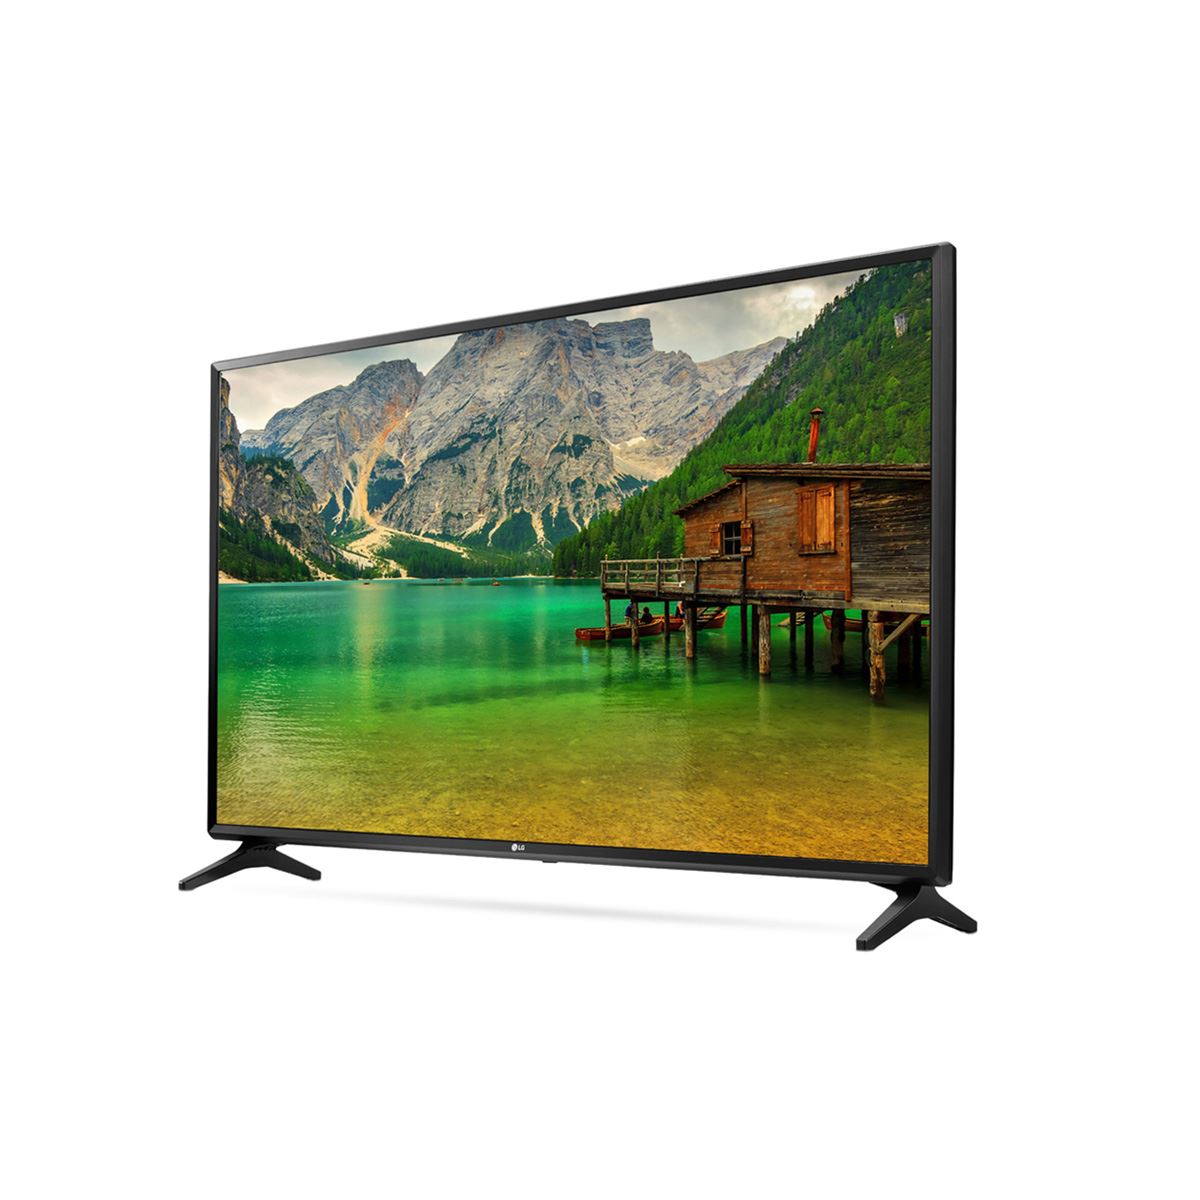 Pantalla LG Full HD Smart TV 43" LJ5500